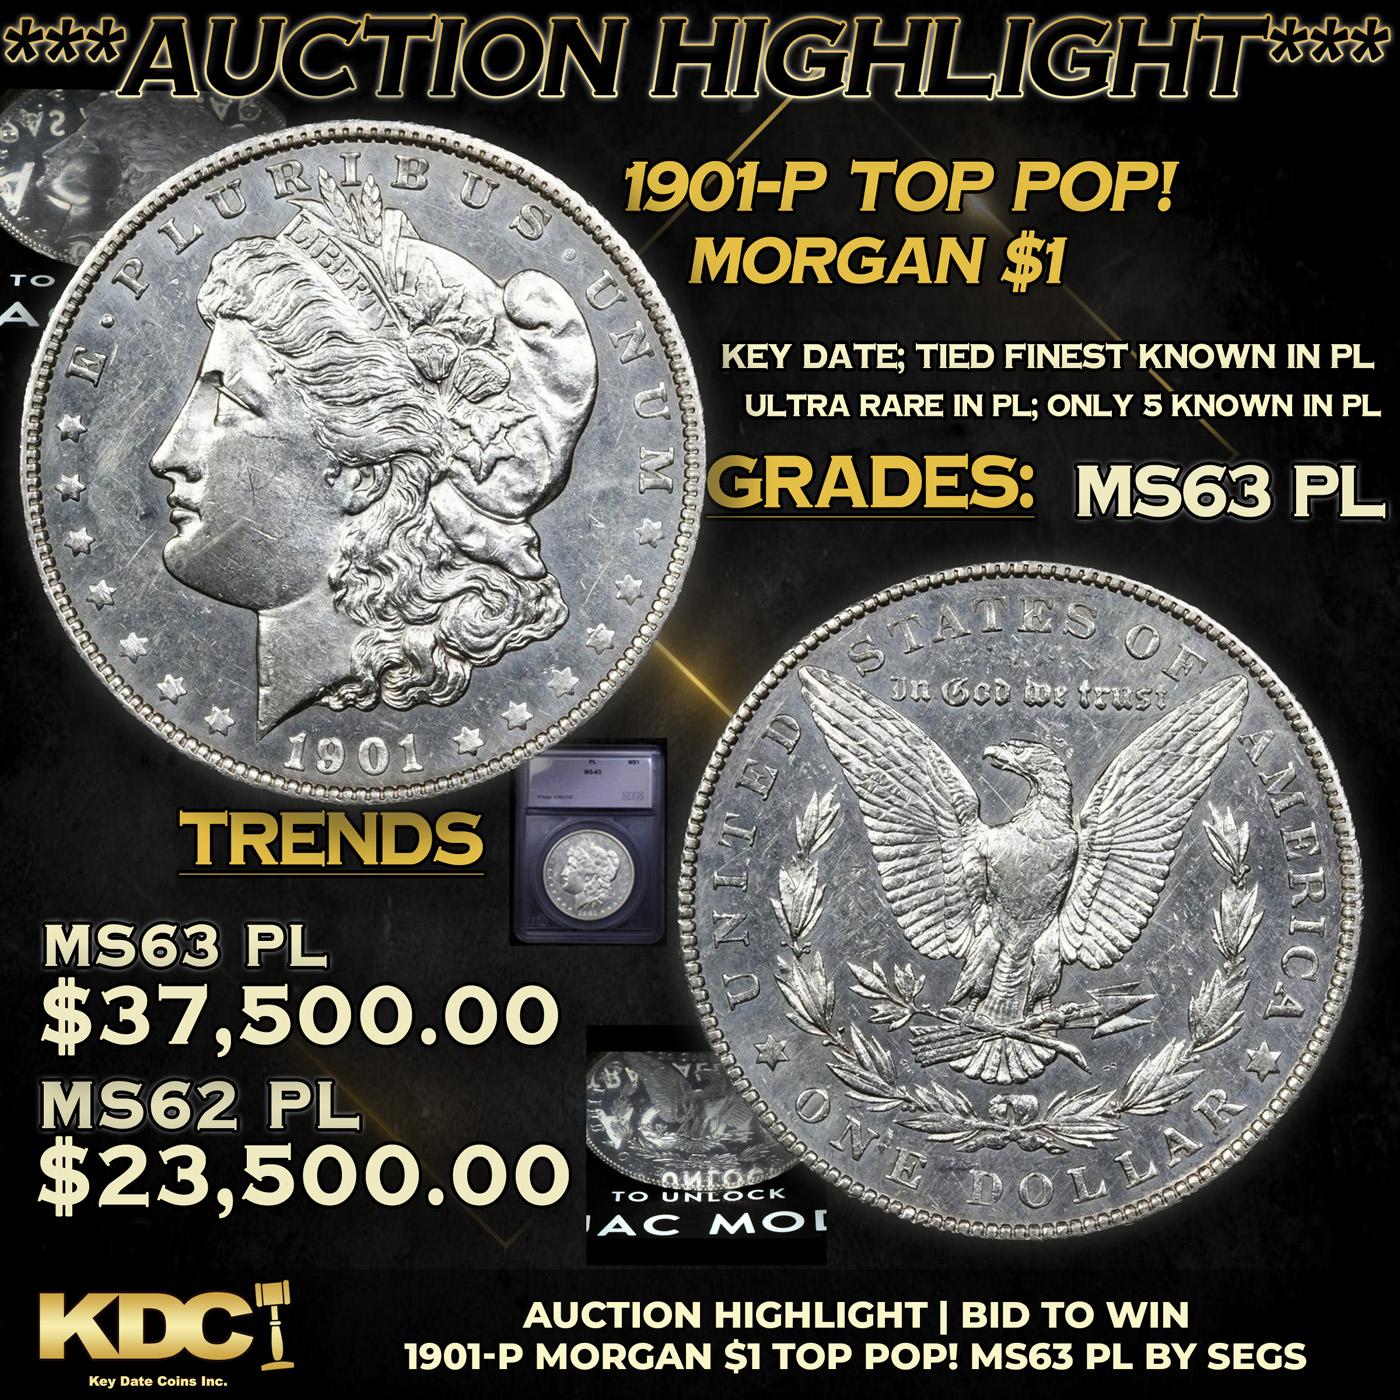 ***Auction Highlight*** 1901-p Morgan Dollar TOP POP! 1 Graded ms63 PL By SEGS (fc)